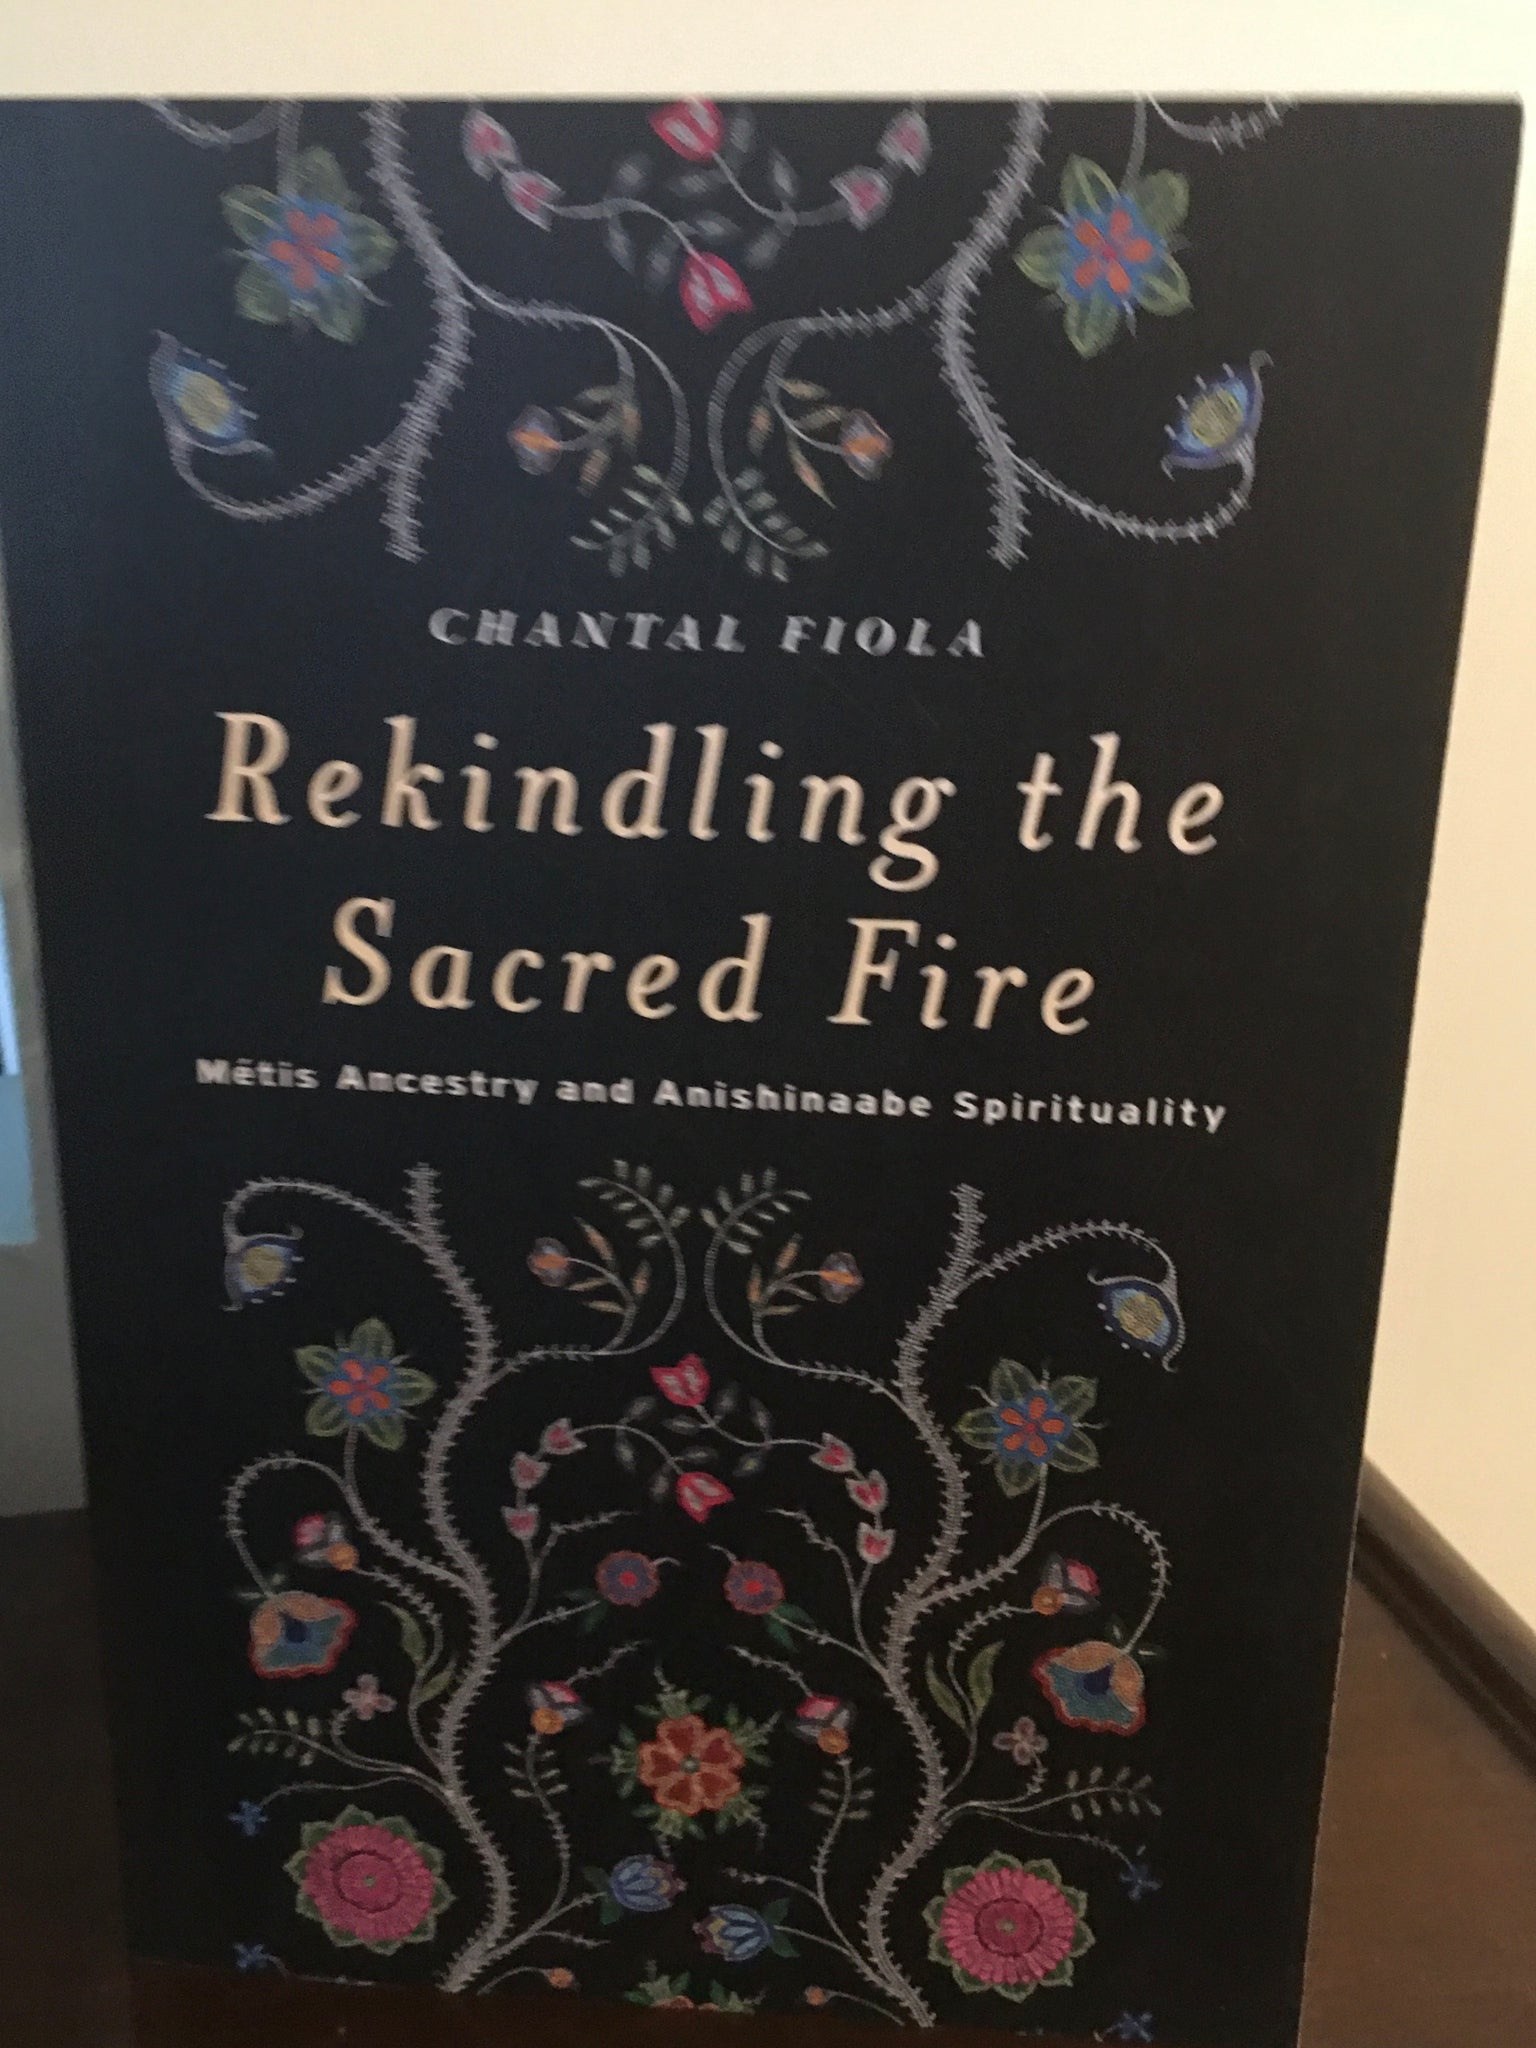 Rekindling the Sacred Fire  Metis Ancestry and Anishinaabe Spirituality